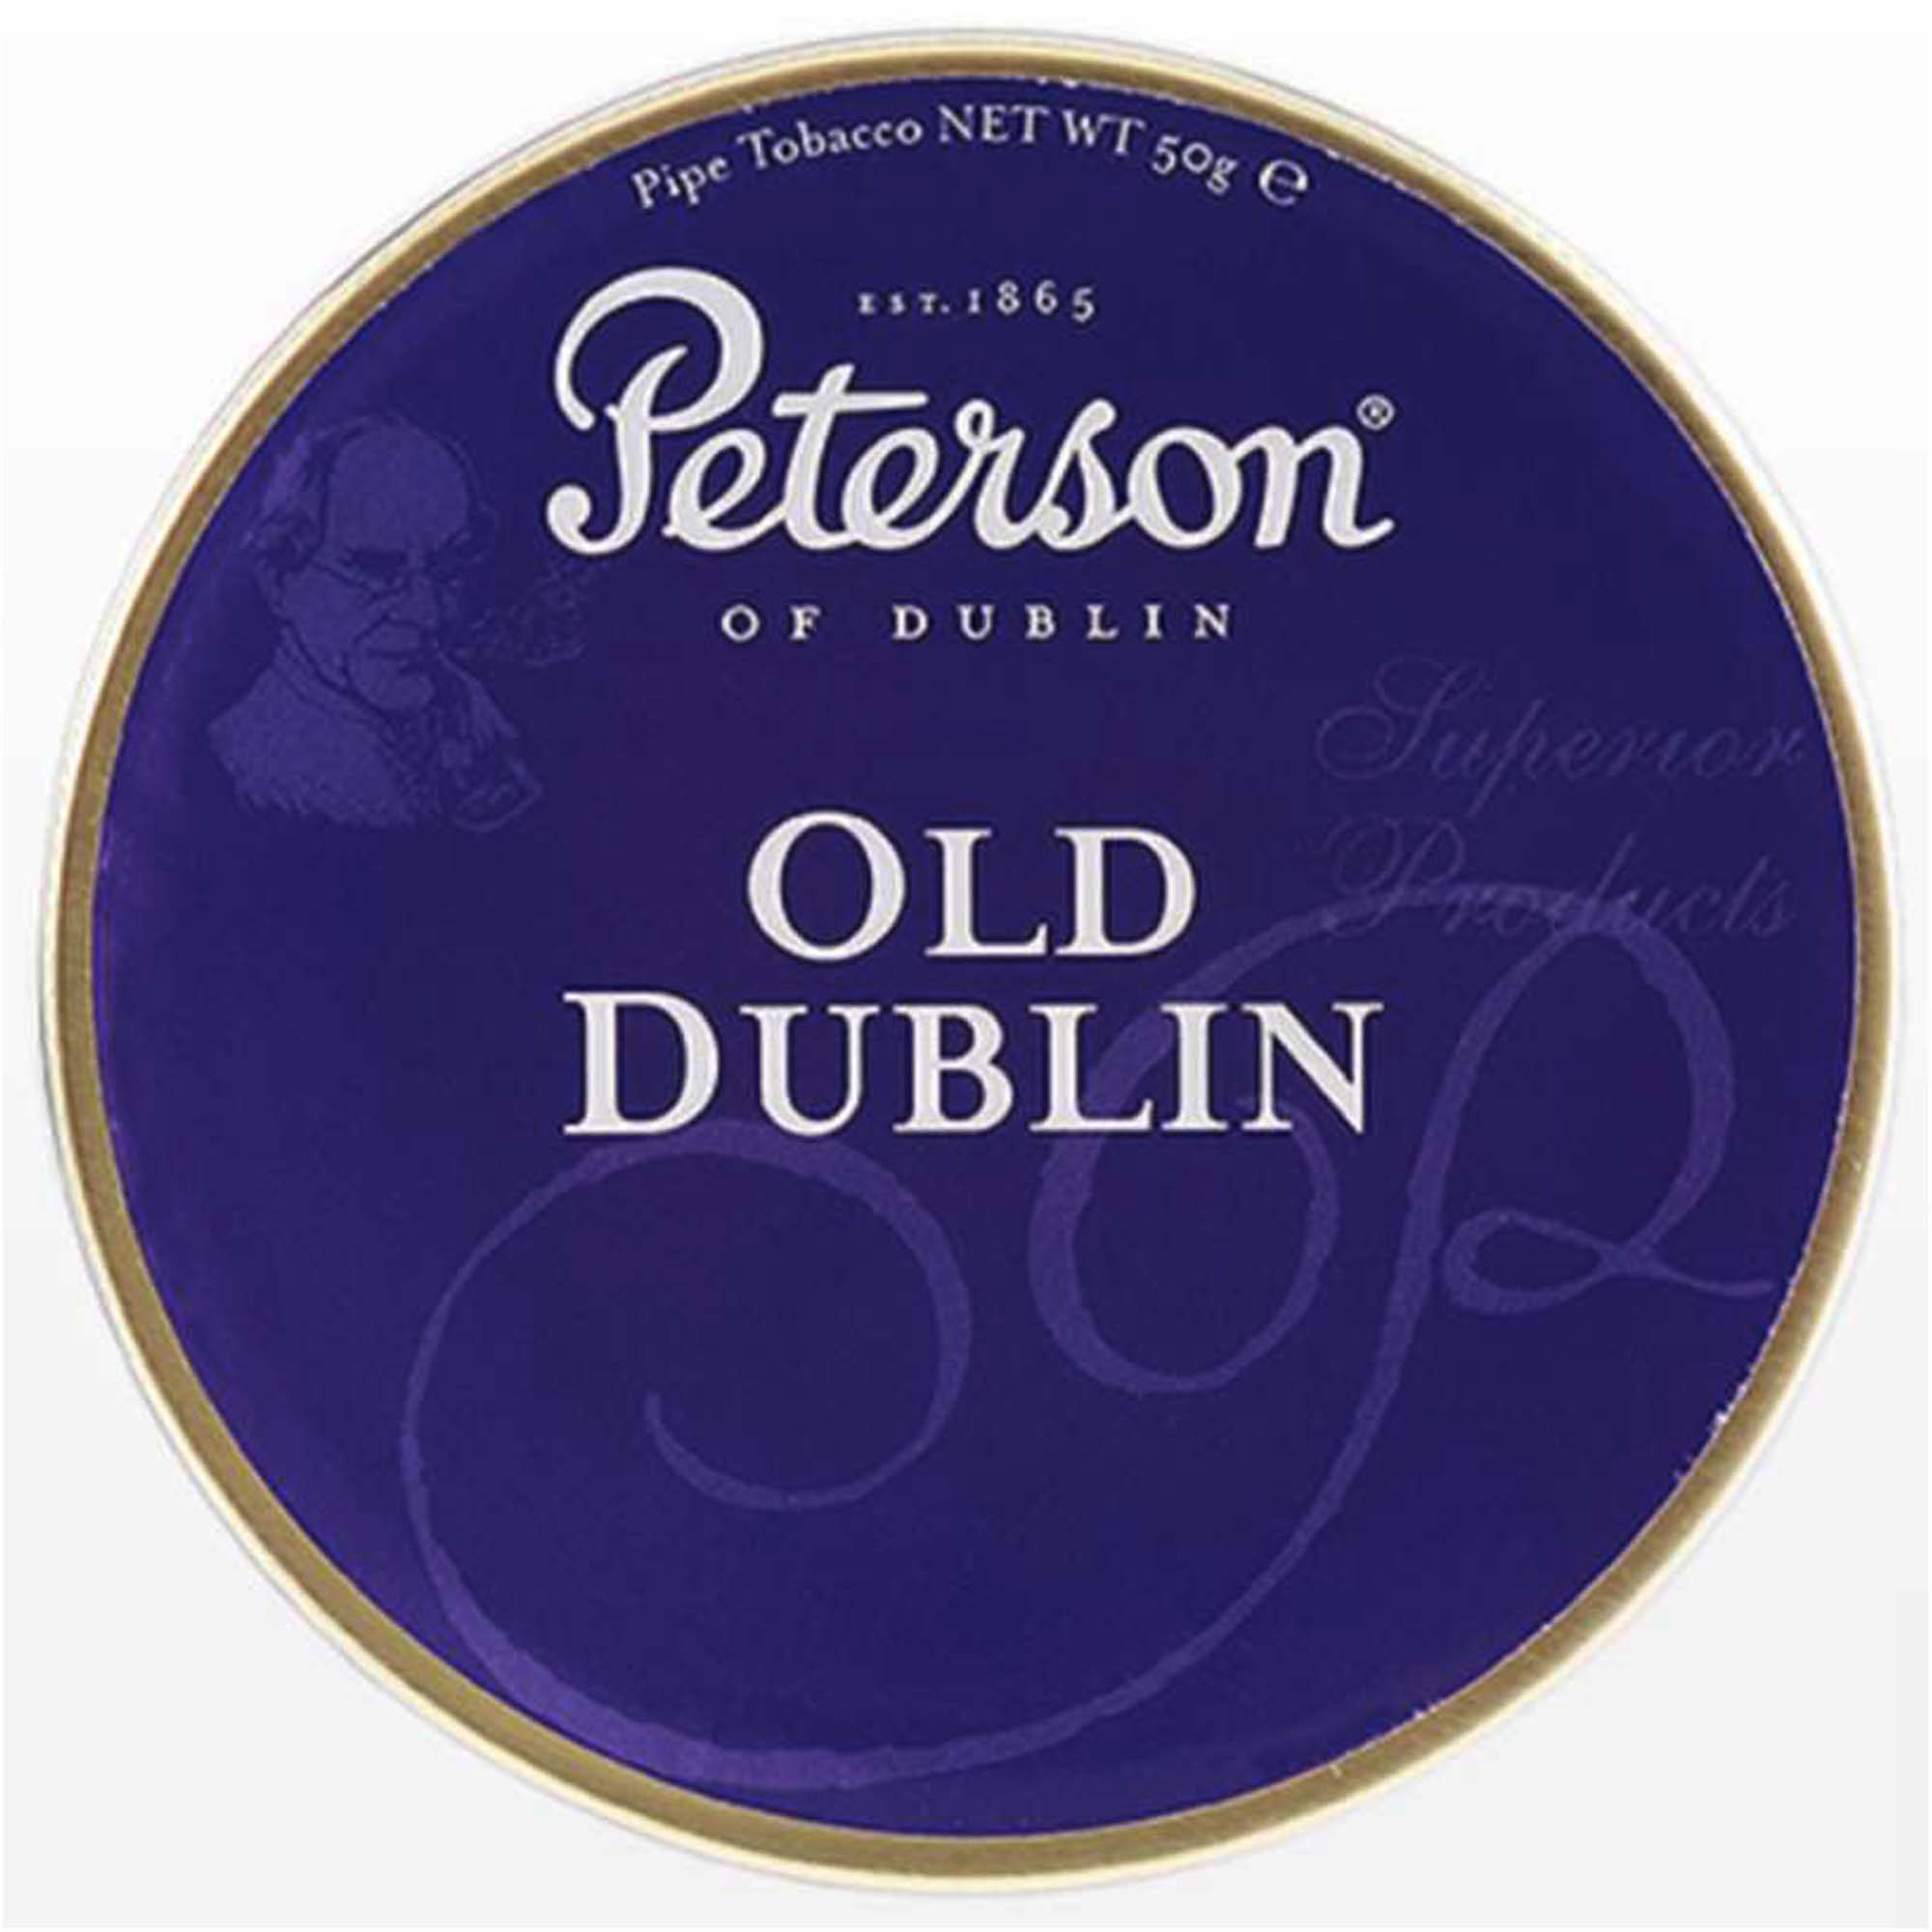 Peterson Pfeifentabak Old Dublin - 50g Tin